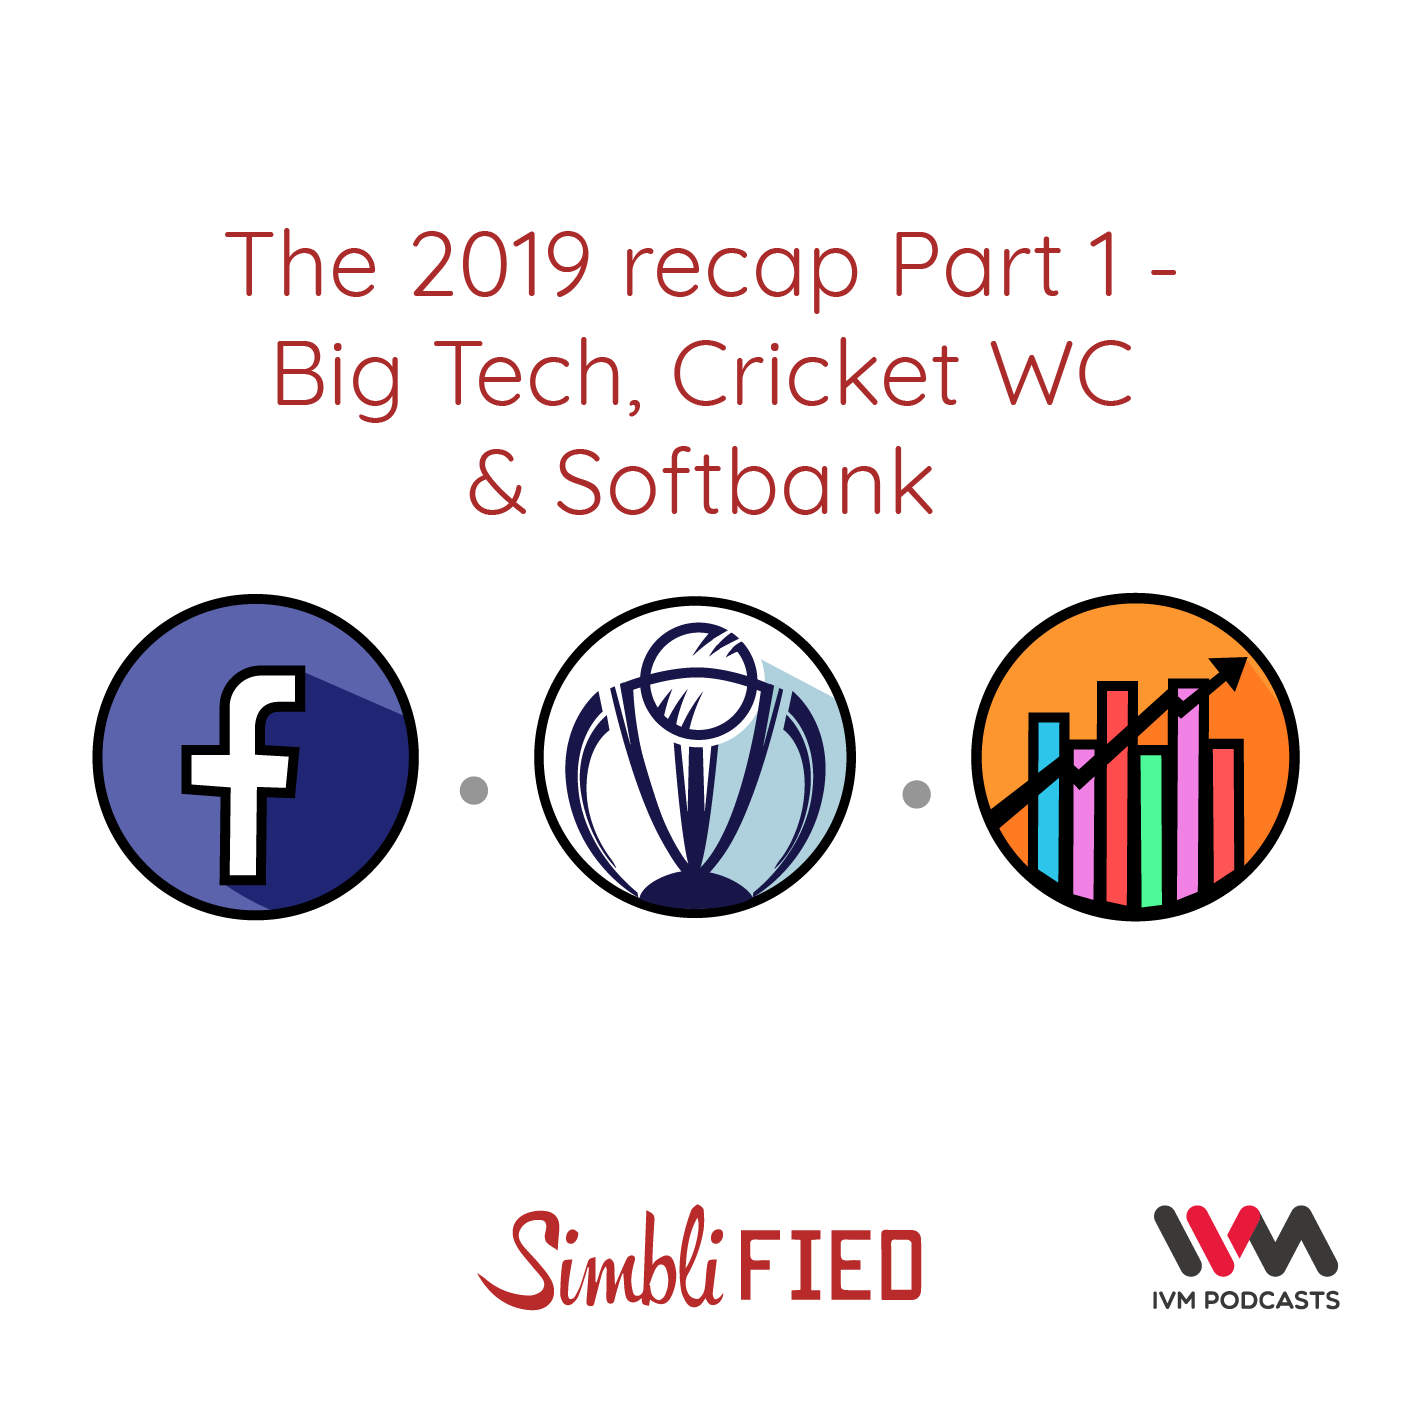 Ep. 161: The 2019 recap Part 1 - Big Tech, Cricket WC & Softbank